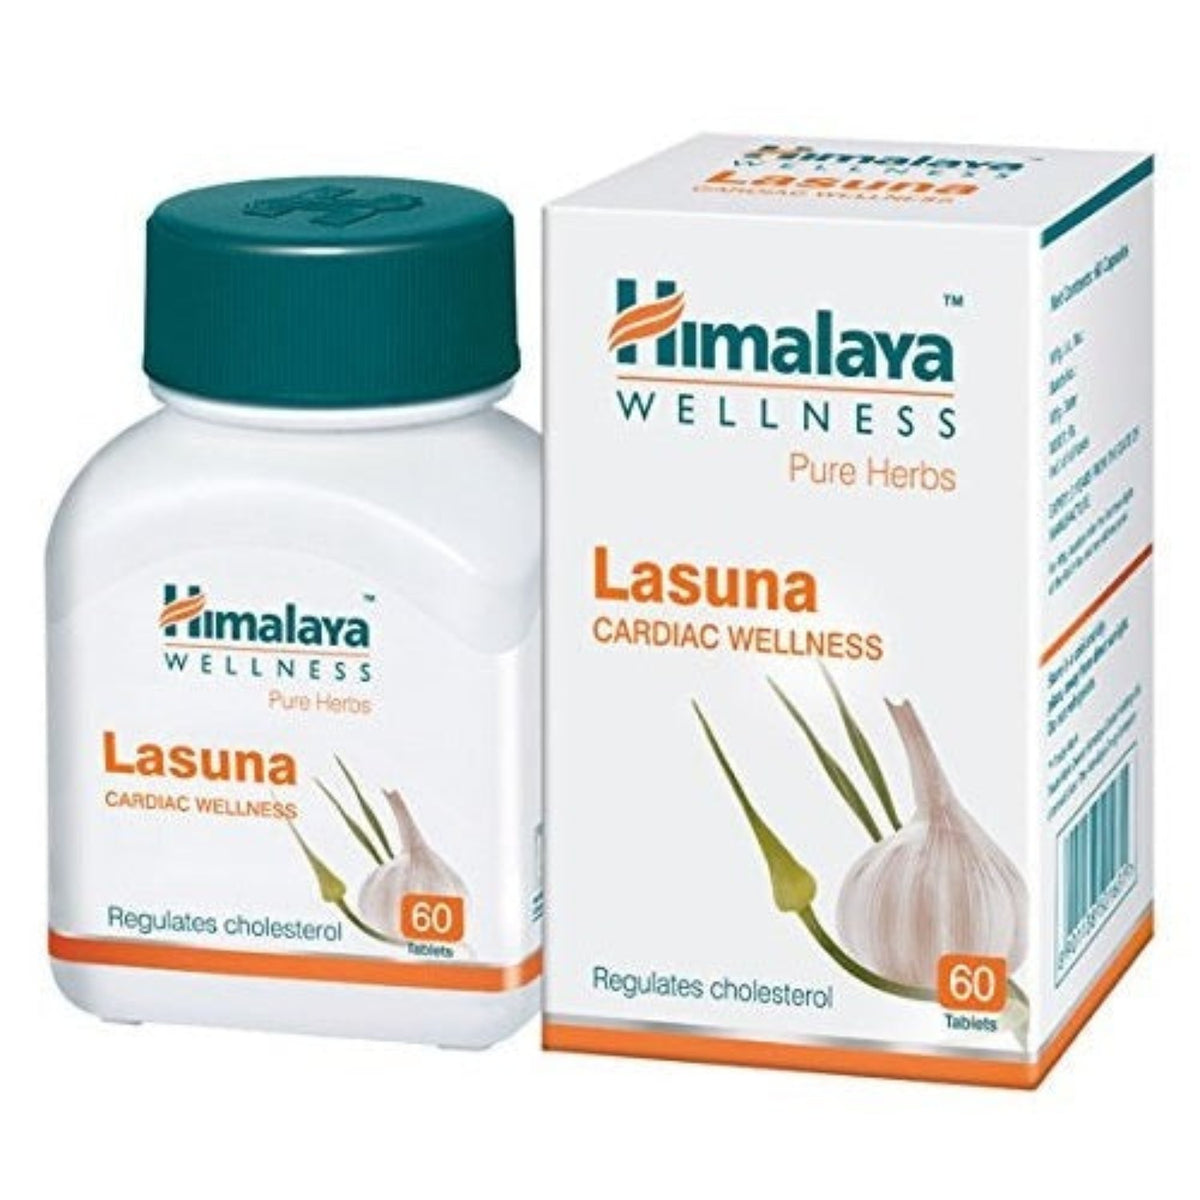 Himalaya Pure Herbs Cardiac Wellness Herbal Ayurvedic Lasuna Regulates Cholesterol 60 Tablets